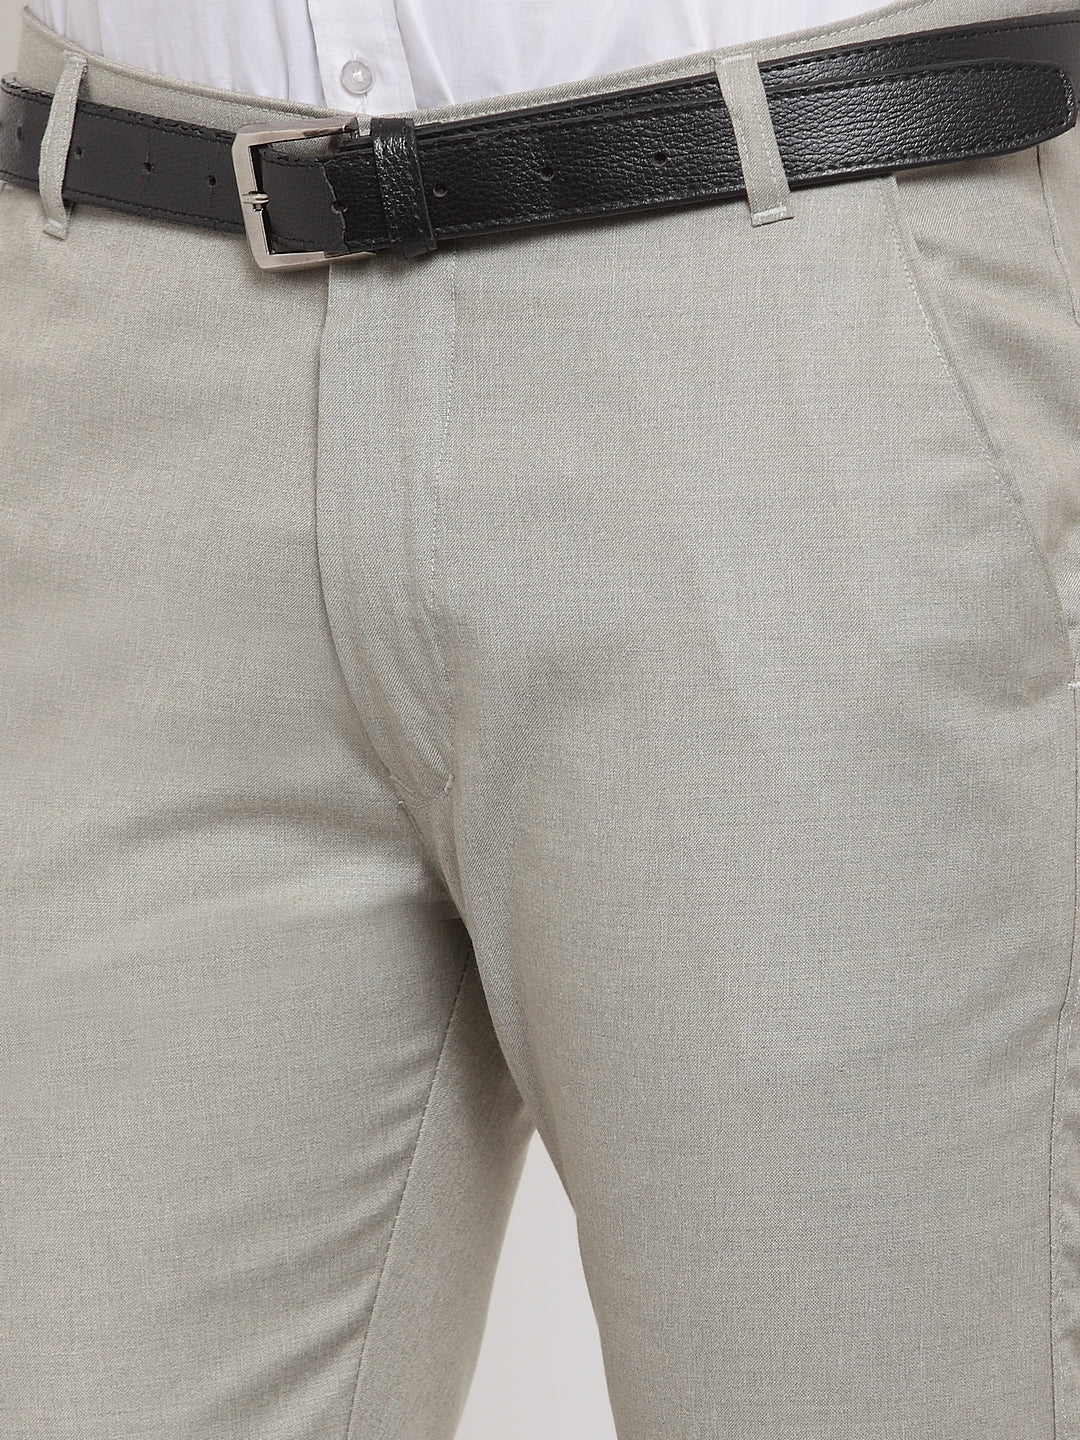 Jainish Men's Grey Cotton Solid Formal Trousers ( FGP 256Light-Grey )